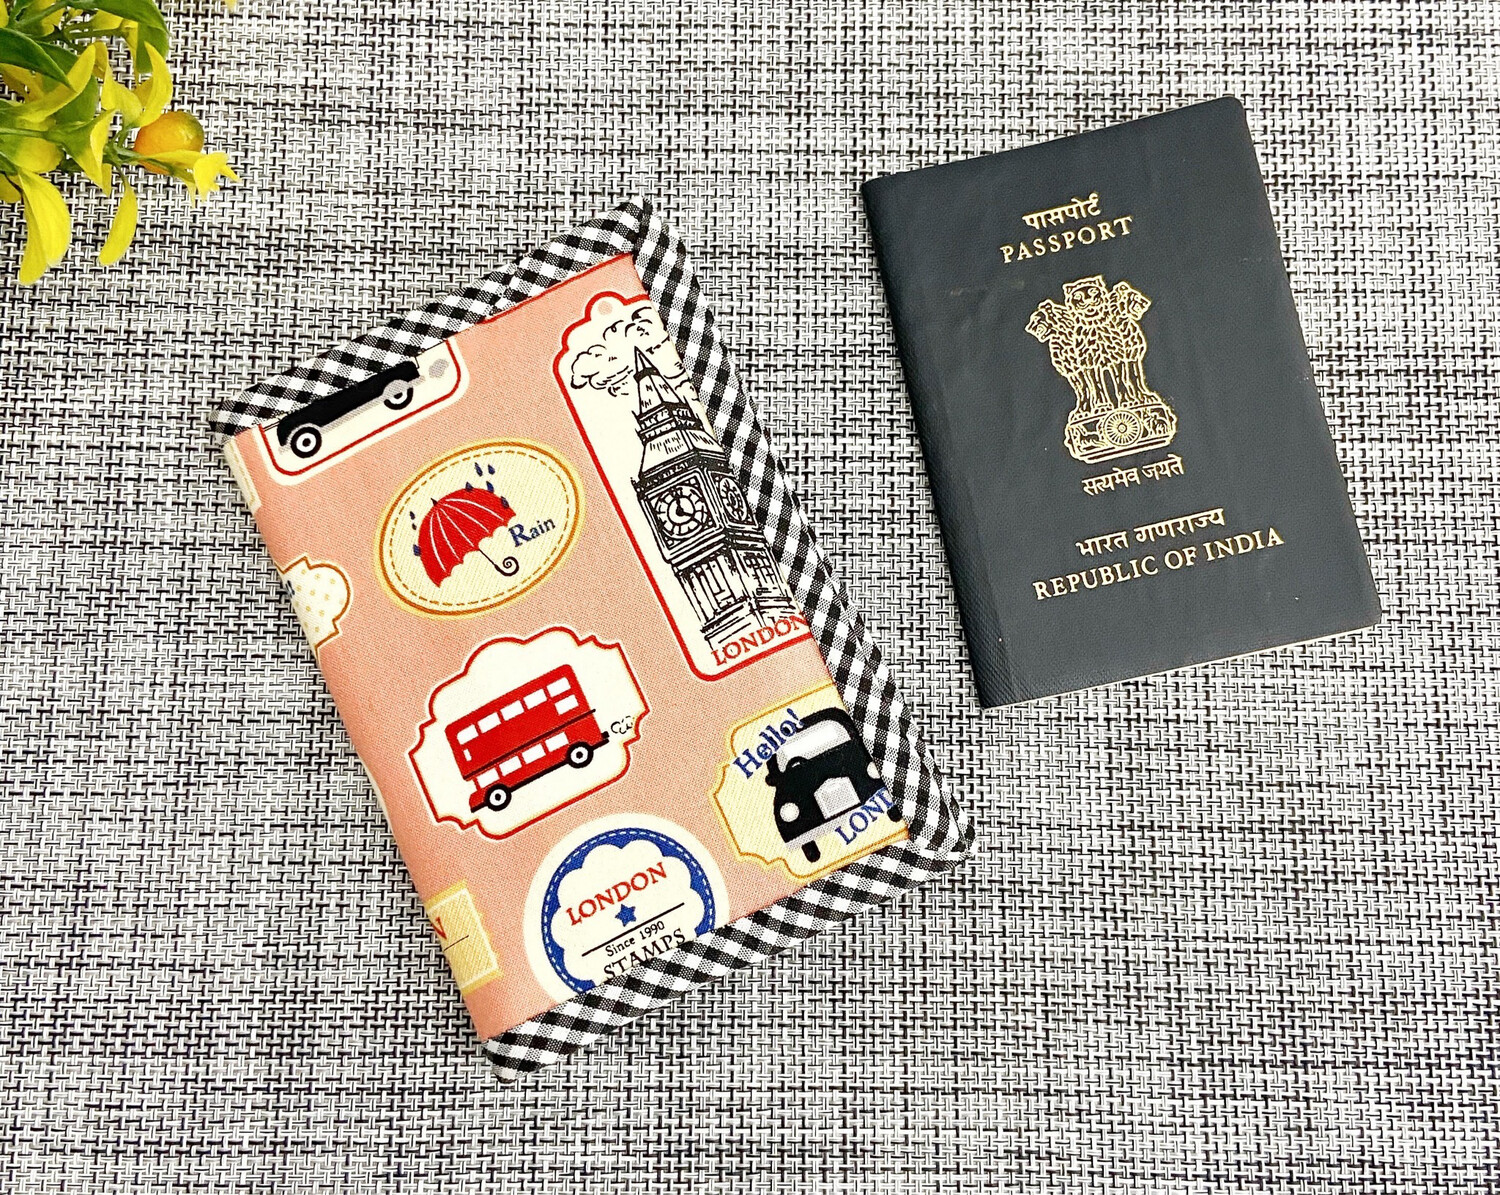 London Theme Travel Wallet Passport Cover